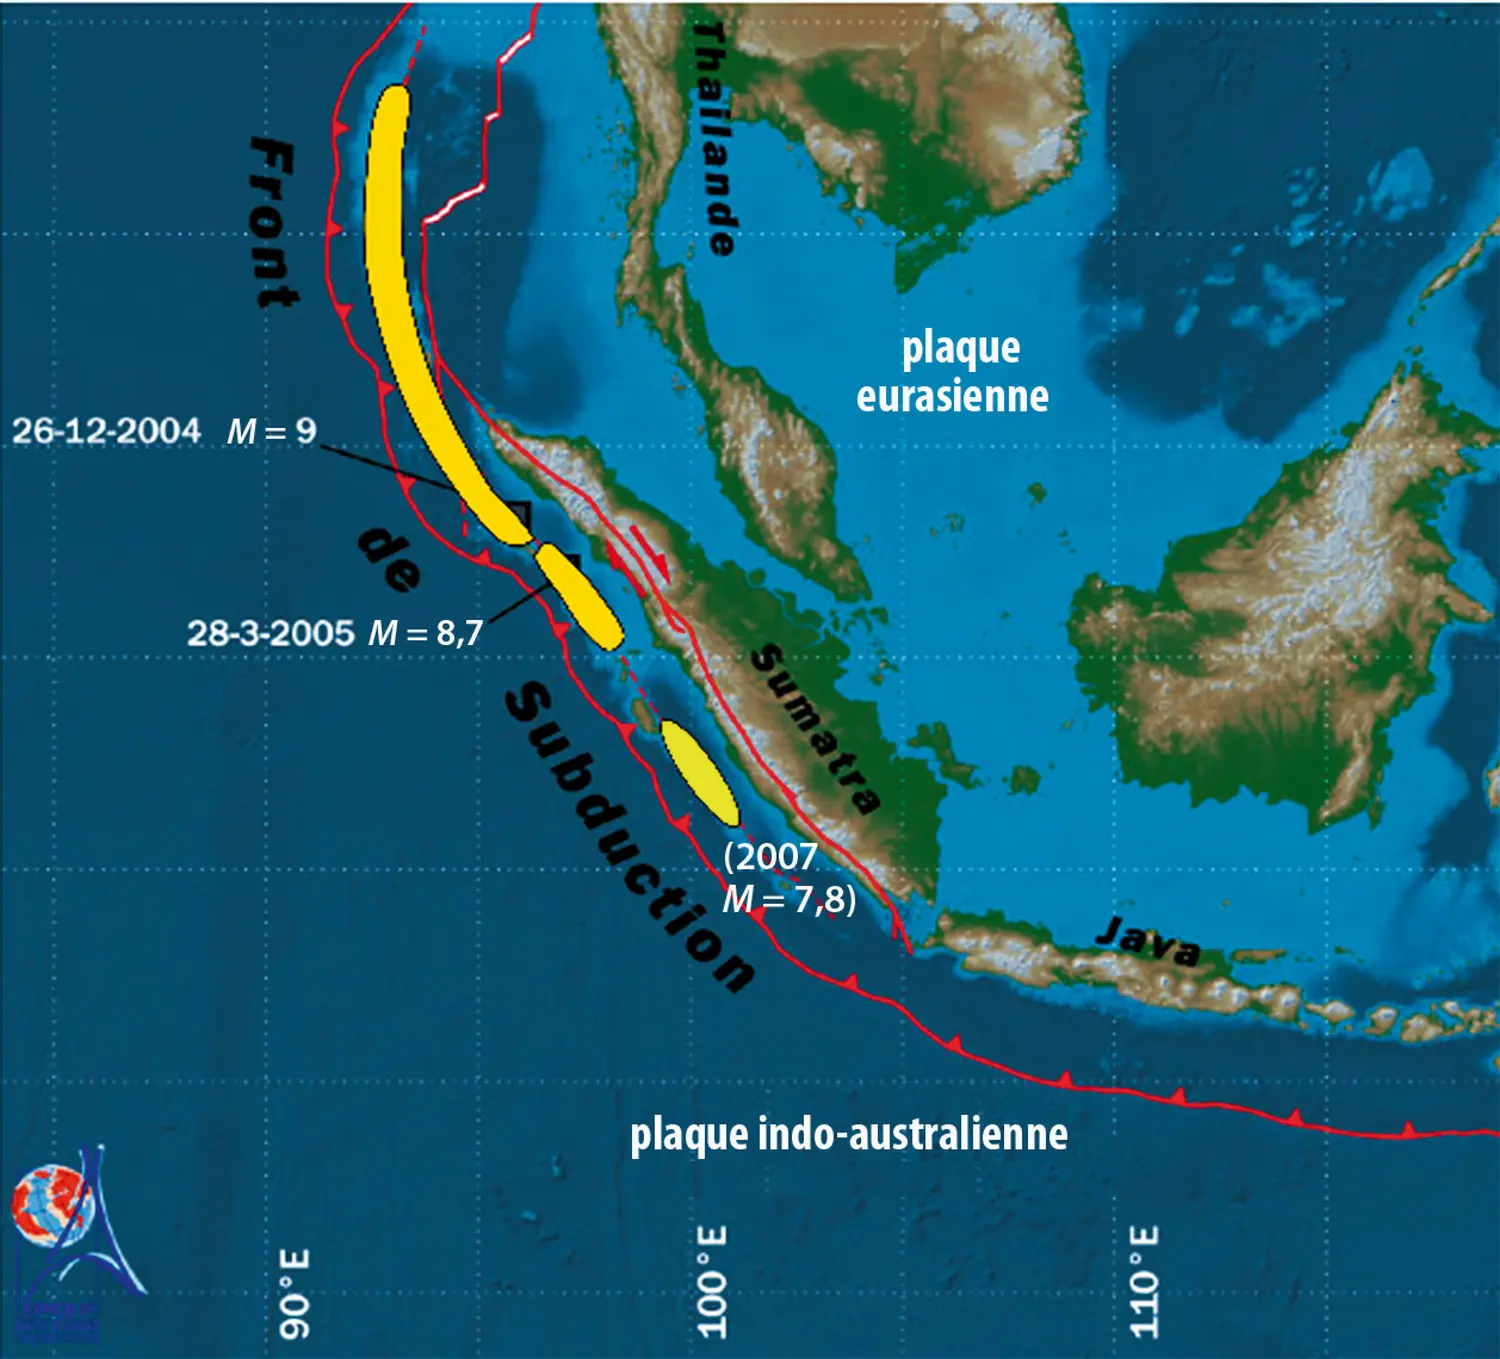 Exemple de cascade sismique à Sumatra